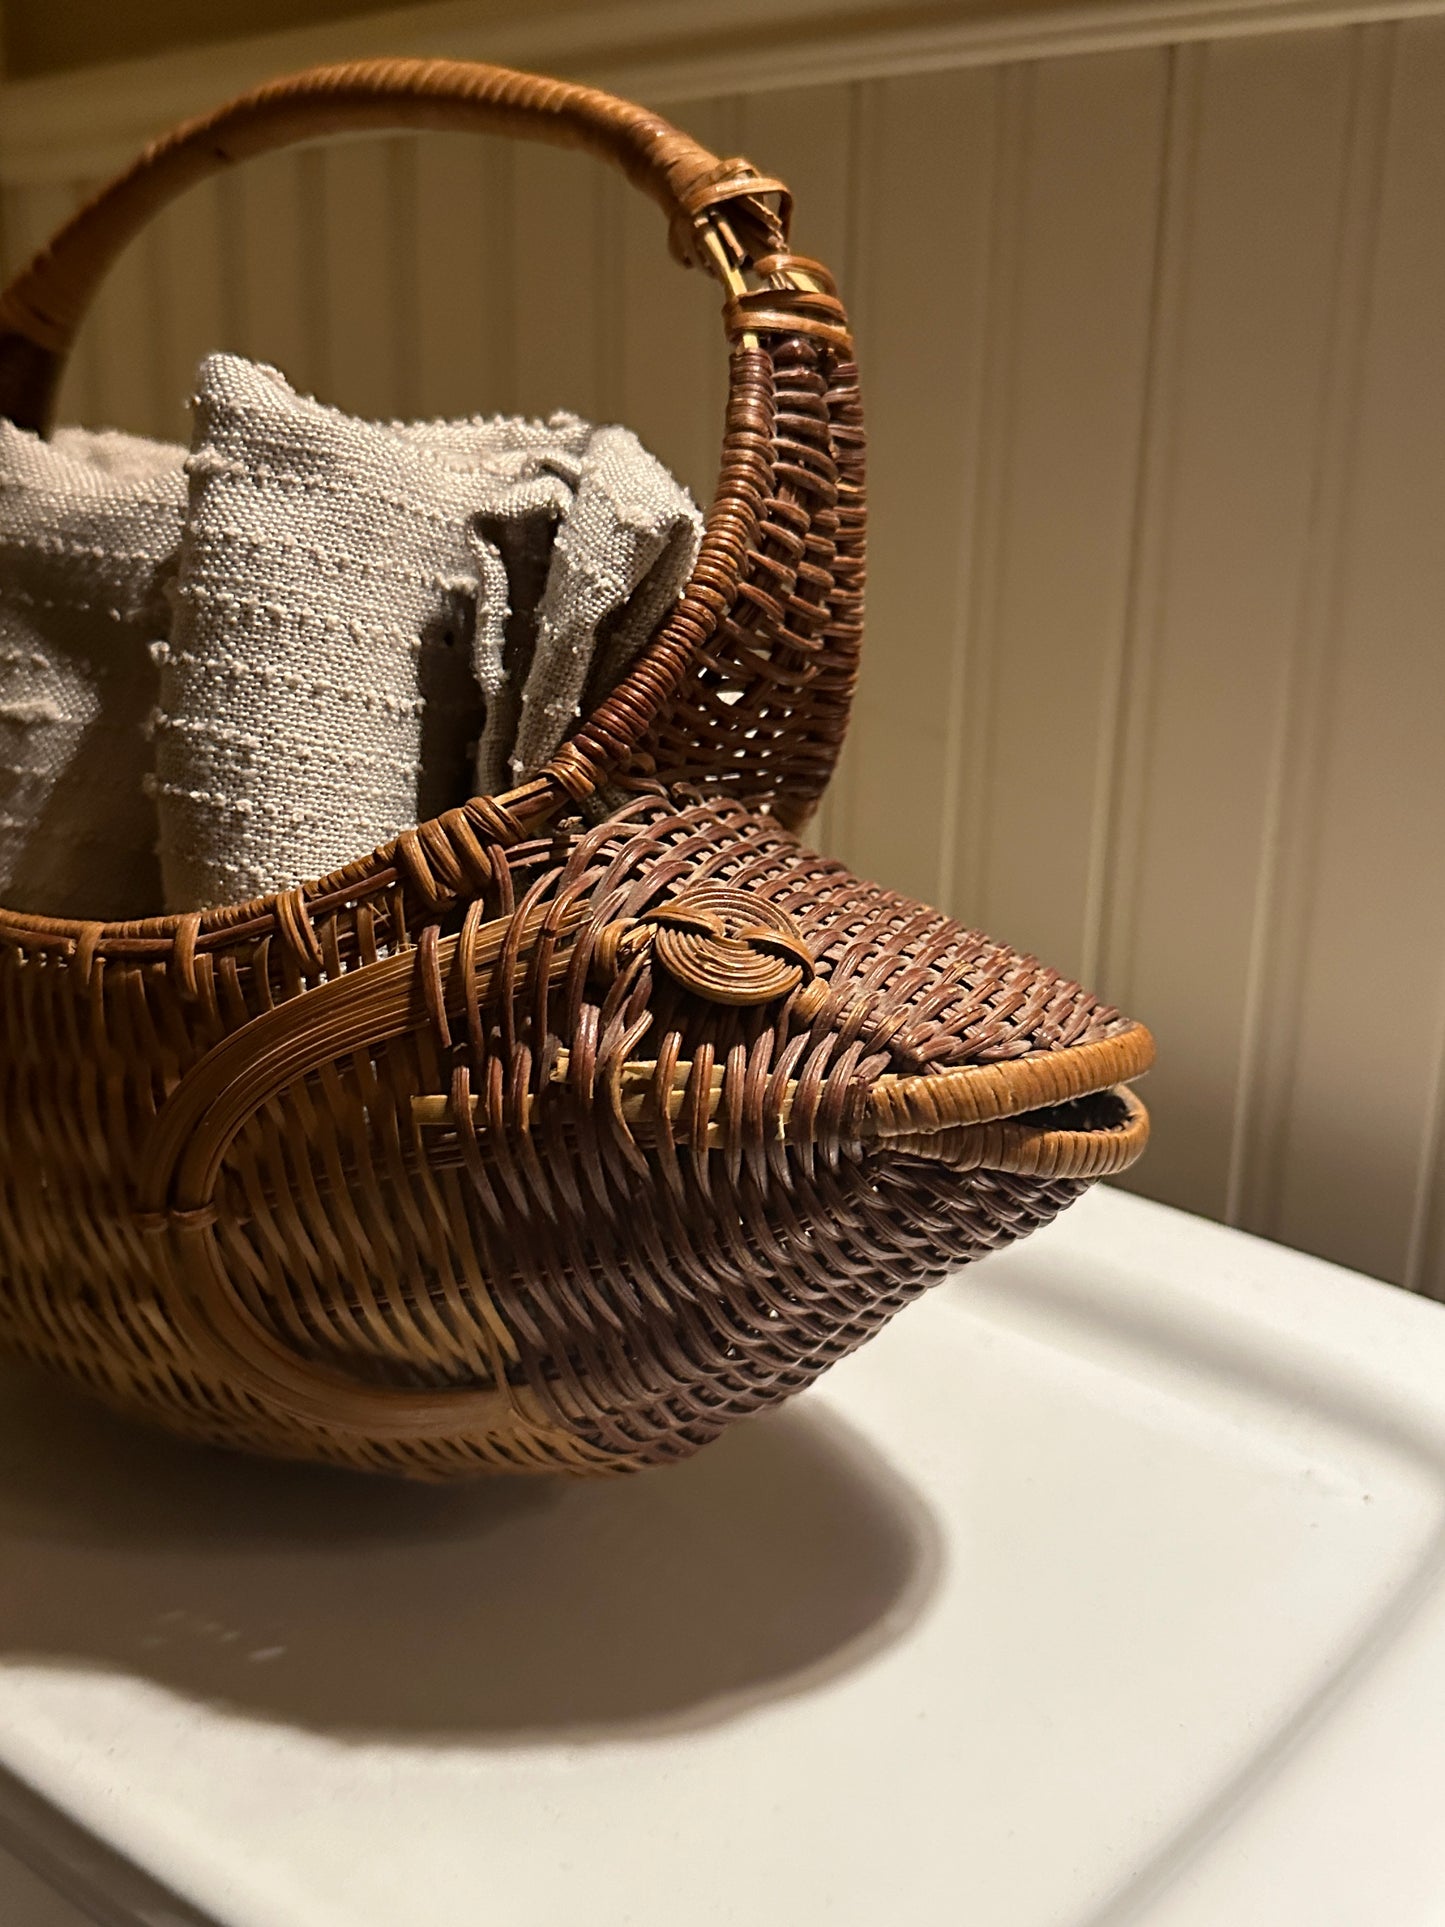 Vintage Natural Rattan Wicker Decorative Fish Woven Basket